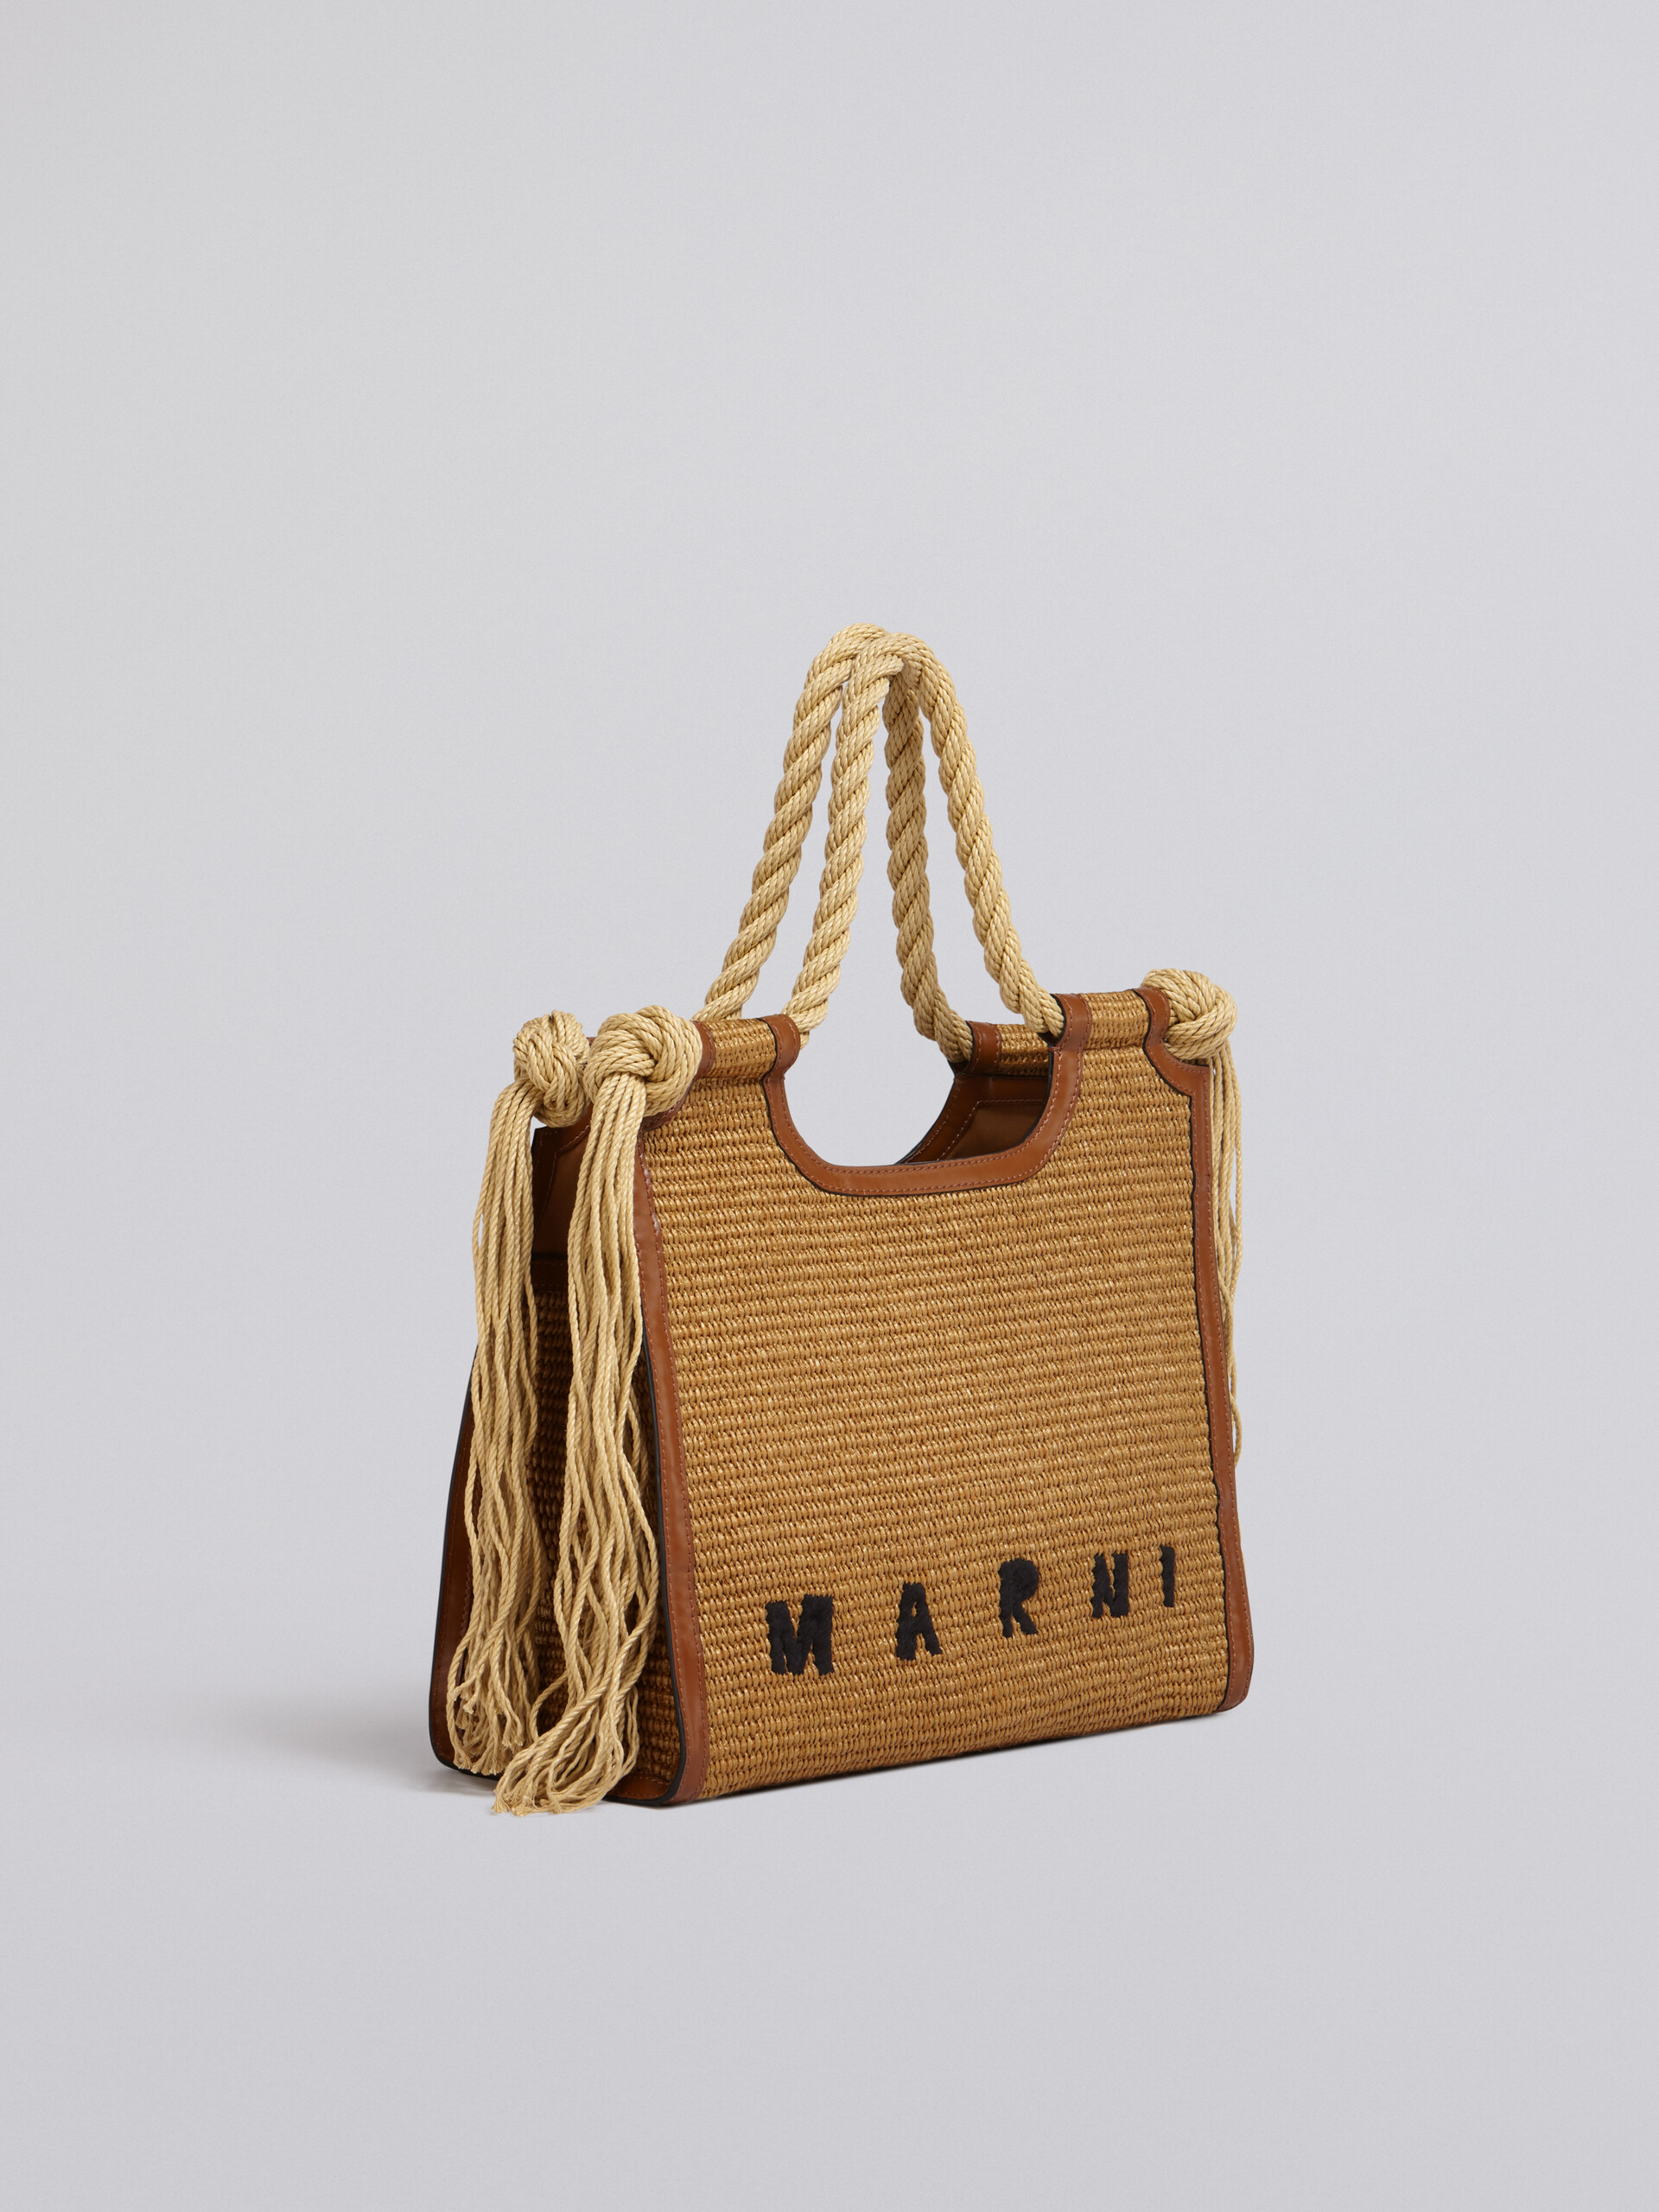 Marcel Summer Bag con manici in corda - Borse a mano - Image 6